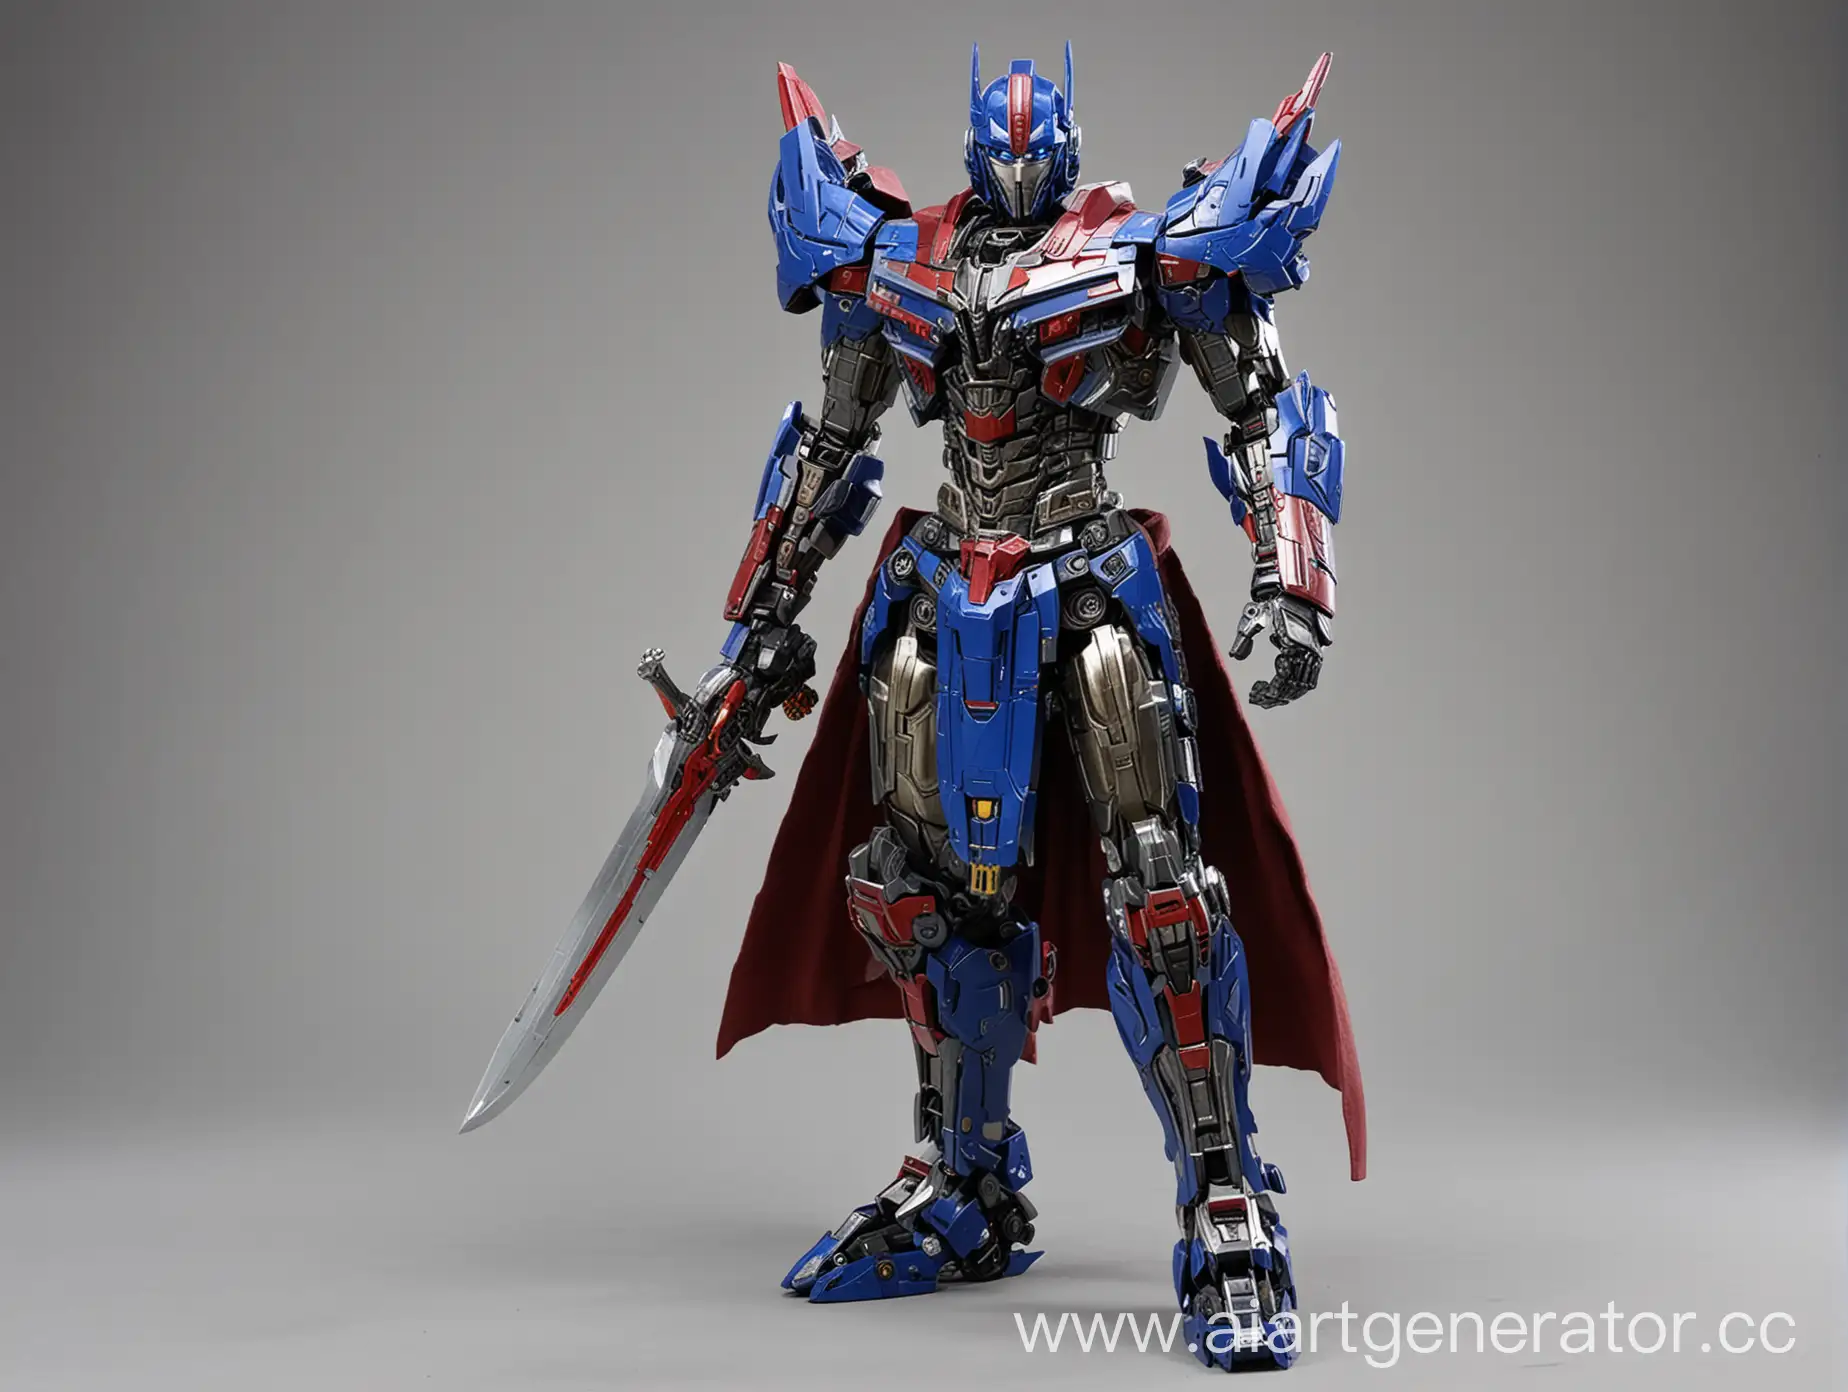 Elegant-Swordsman-in-Transformers-Style